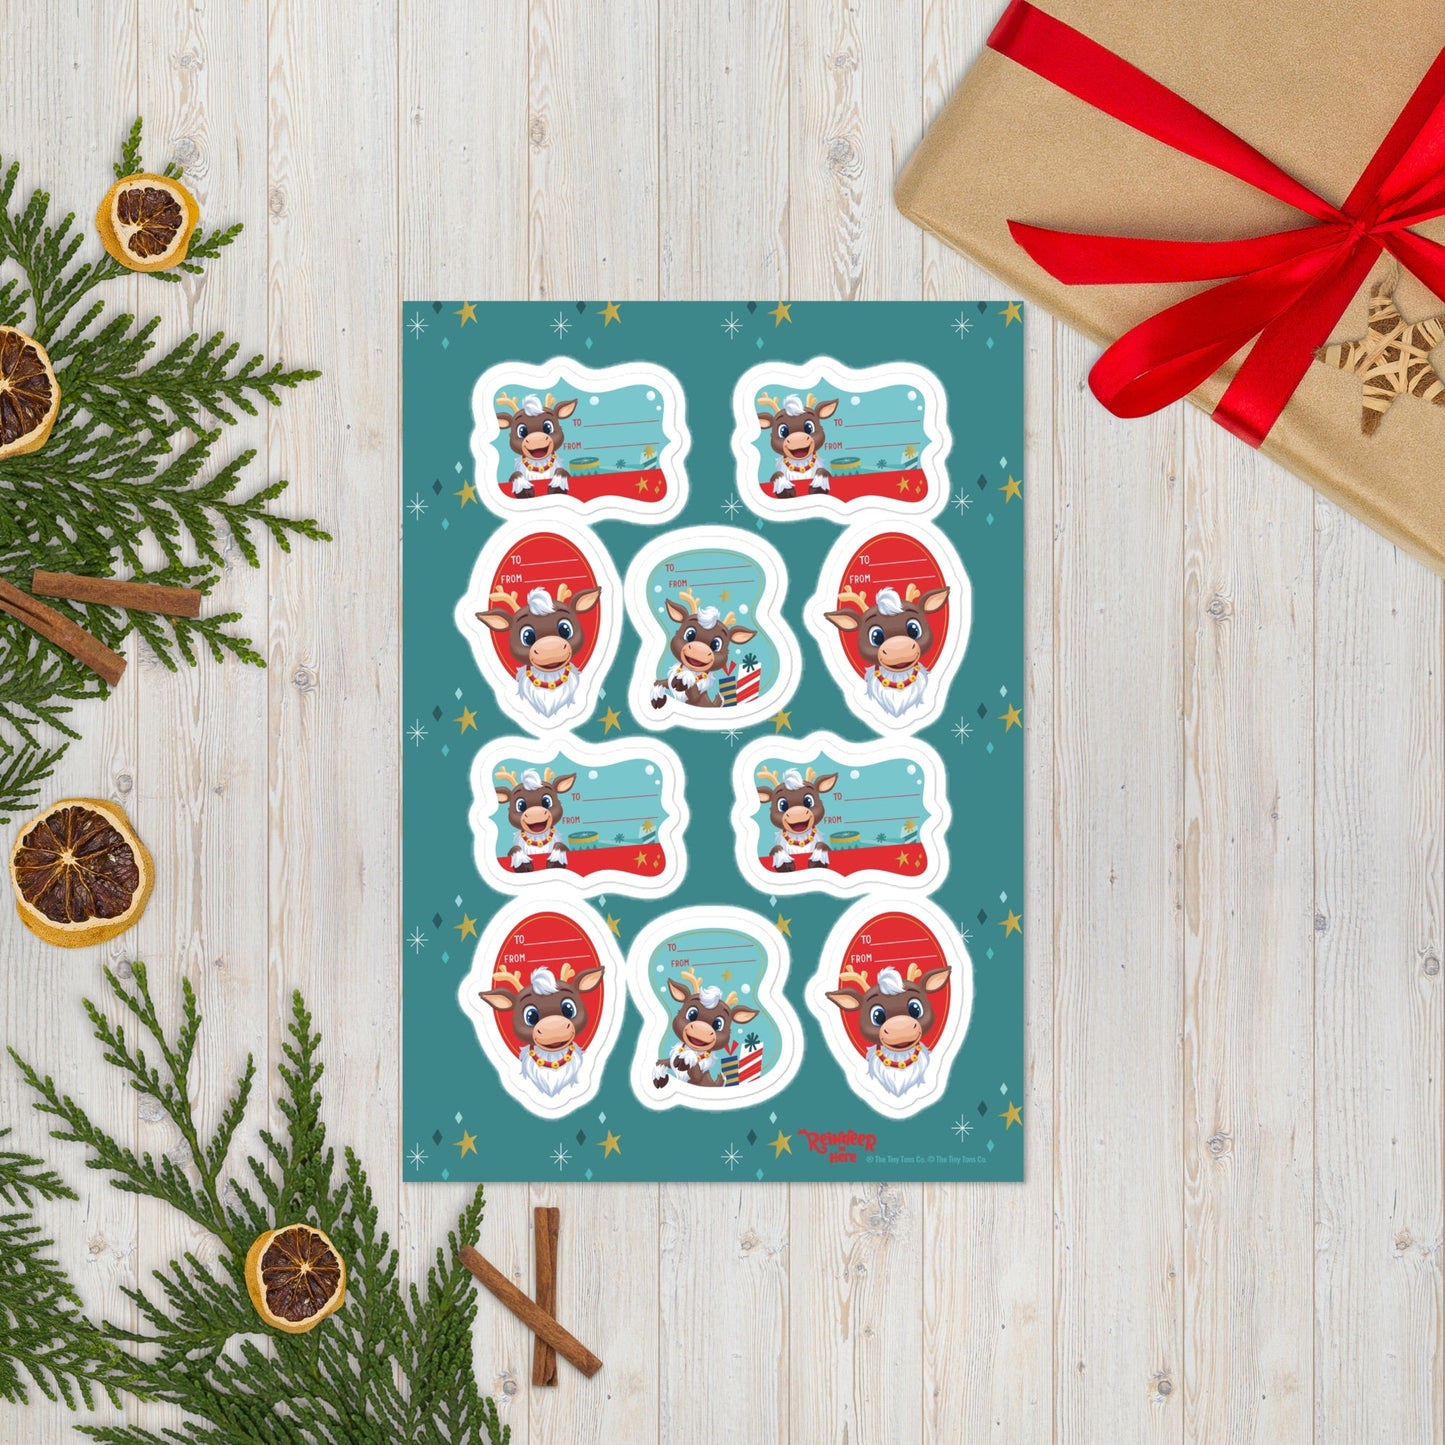 Reindeer in Here Gift Label Sticker Sheet - Paramount Shop